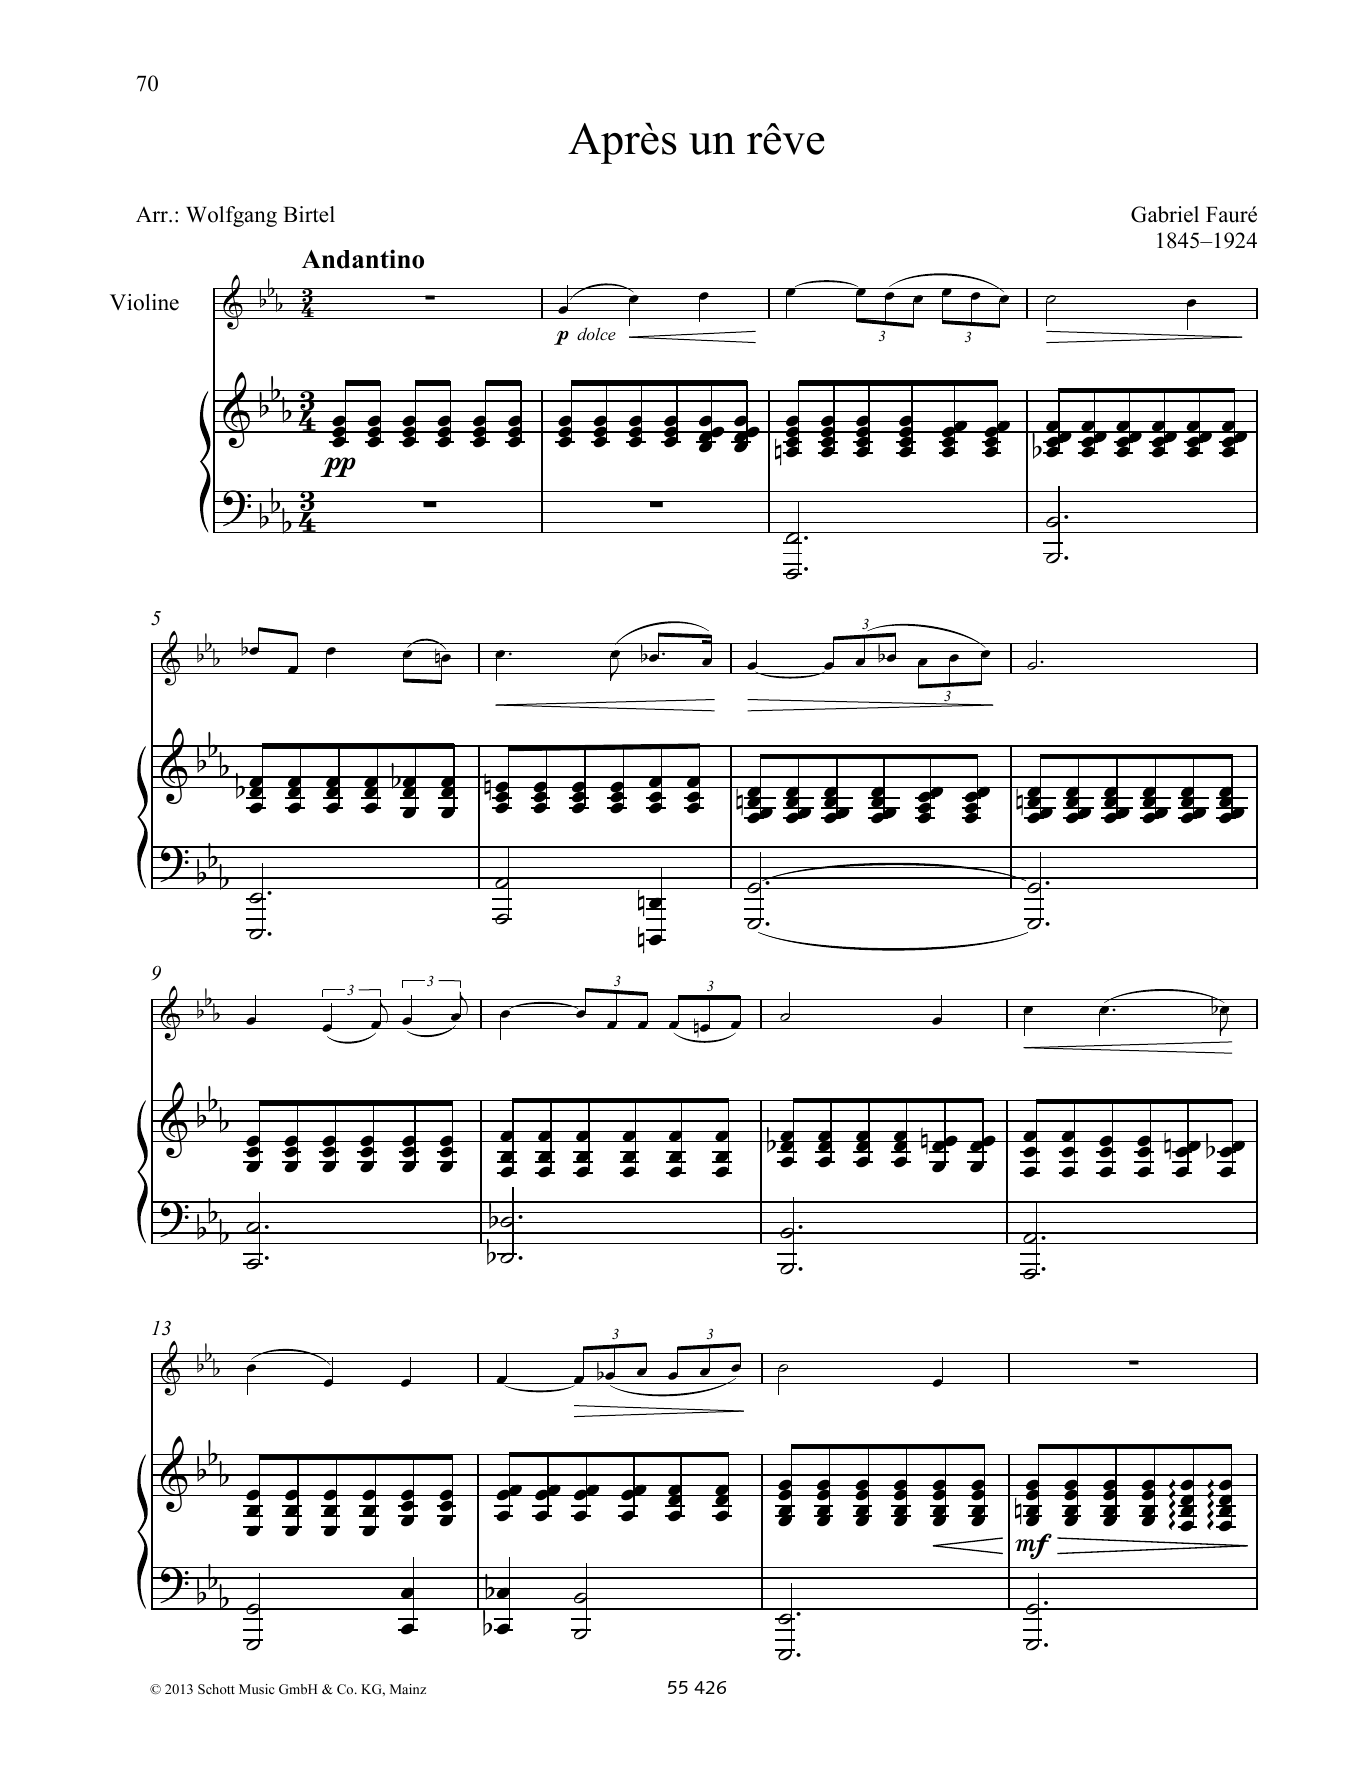 Gabriel Faure Apres Un Reve sheet music notes and chords. Download Printable PDF.